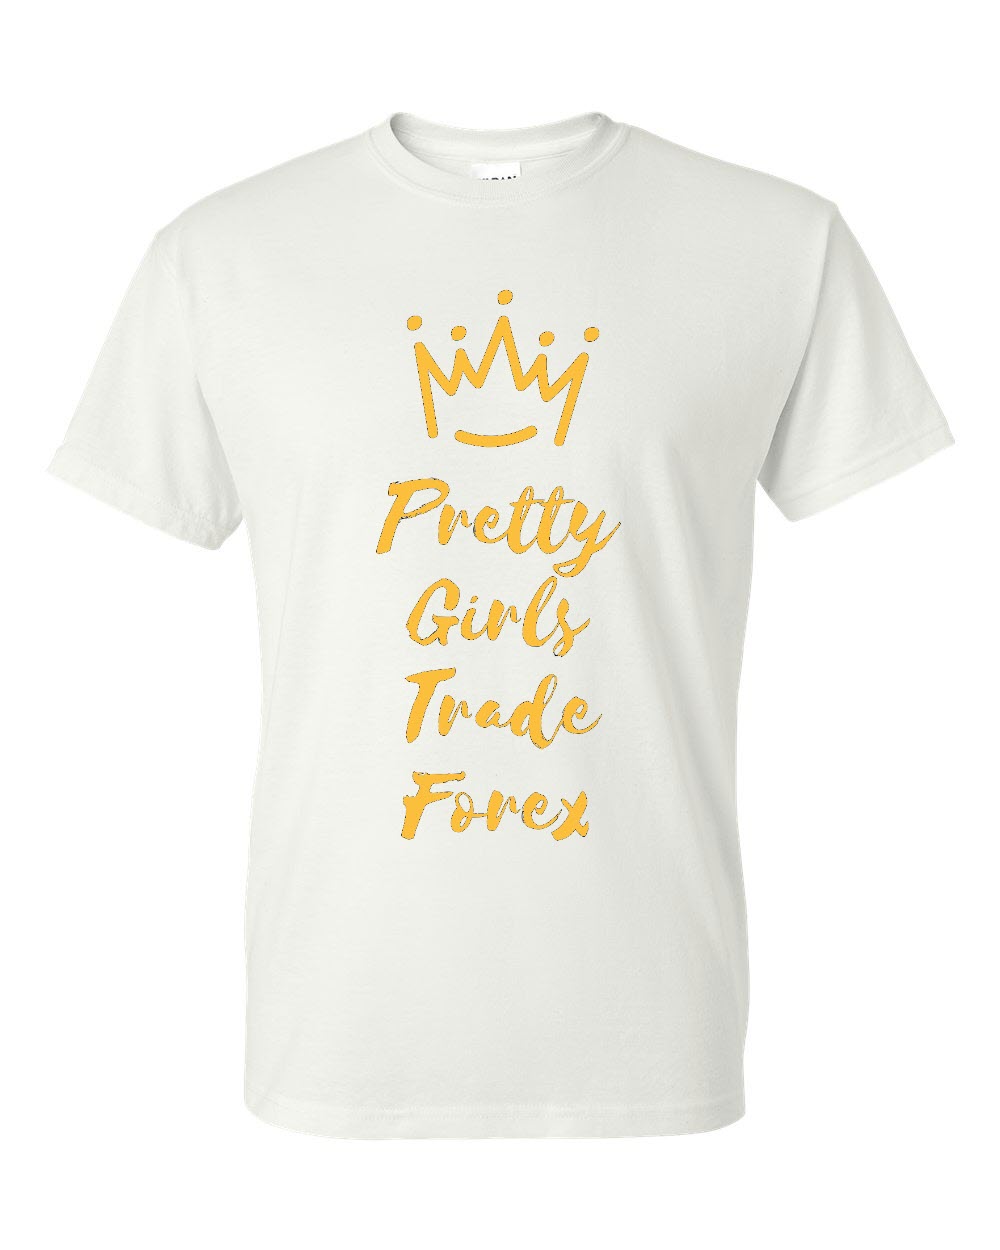 Pretty Girls Trade Forex - Solid